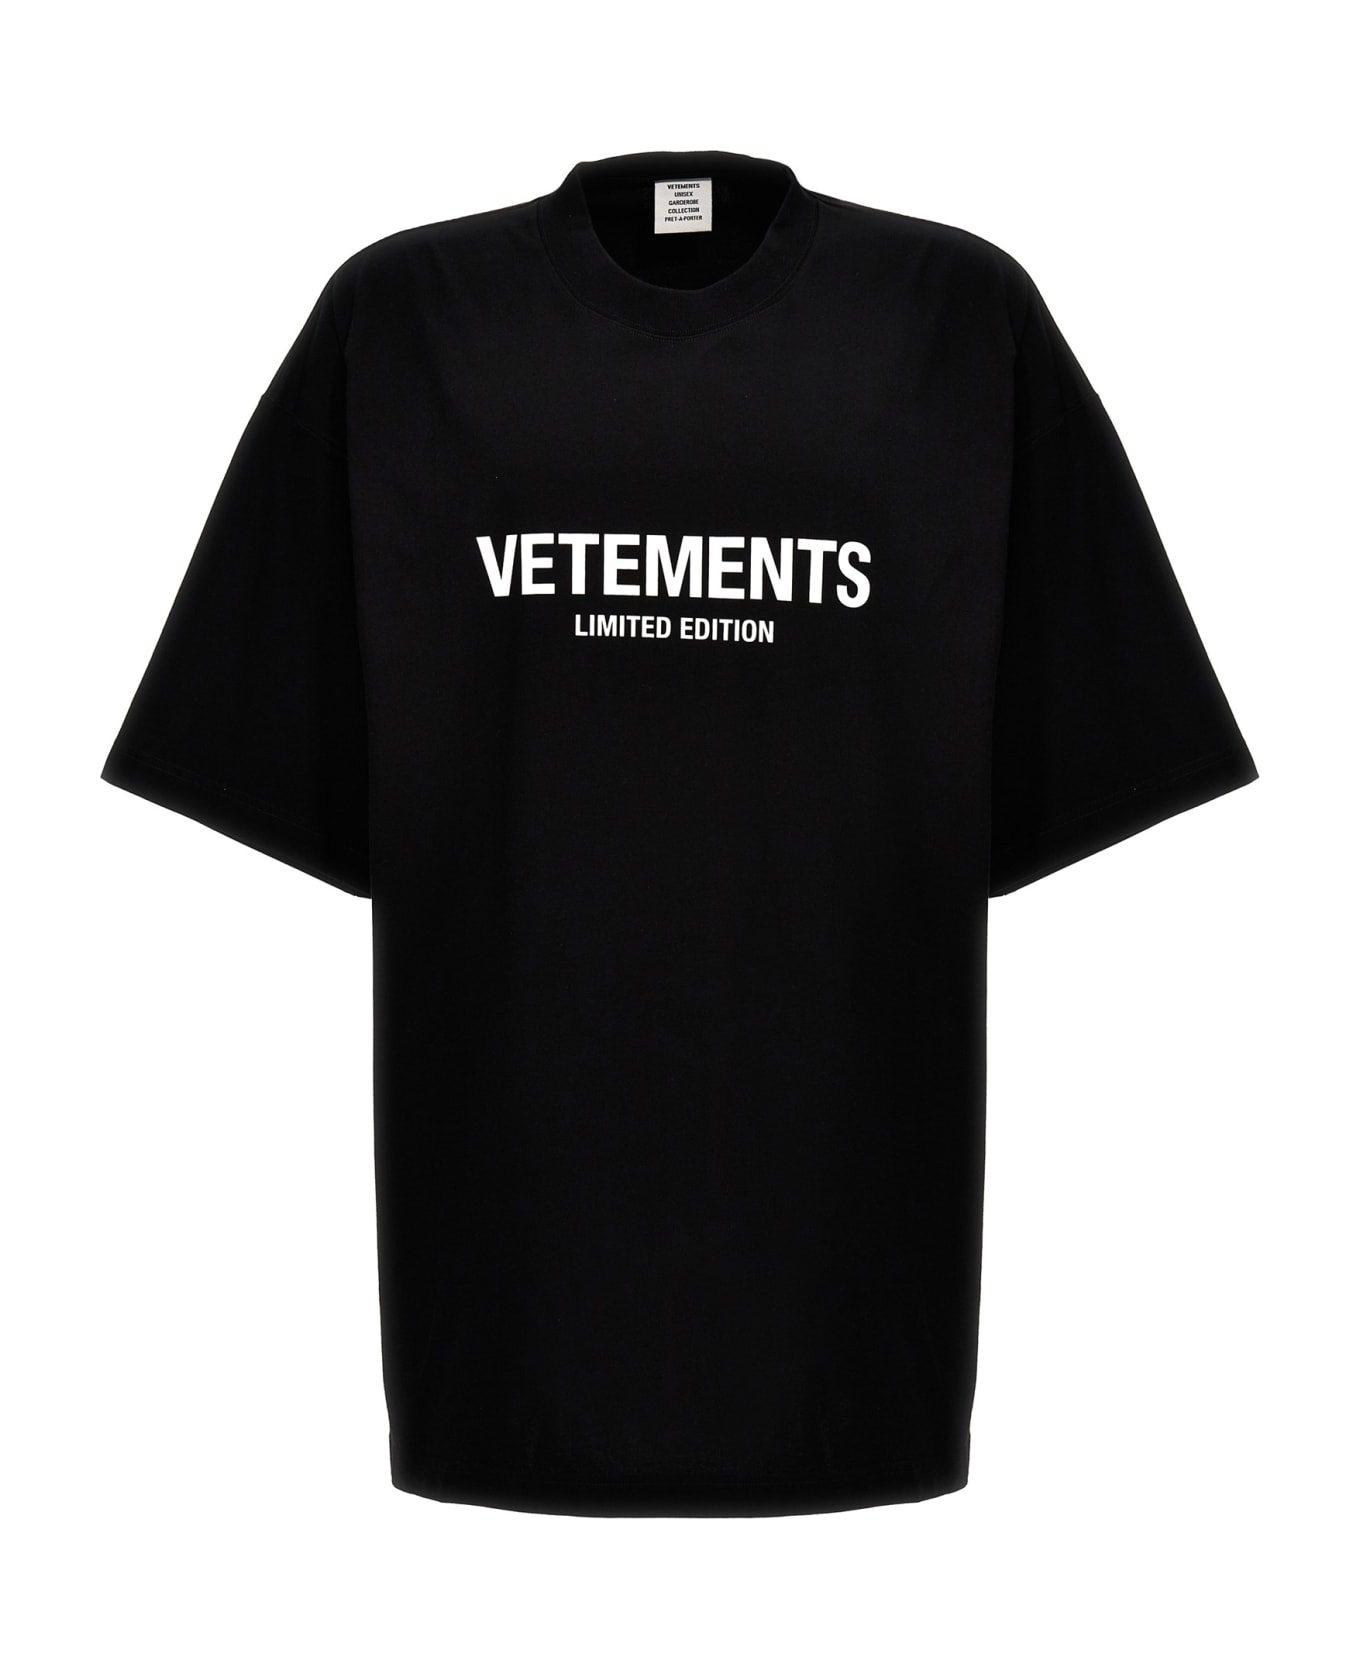 VETEMENTS 'limited Edition' T-shirt - White/Black